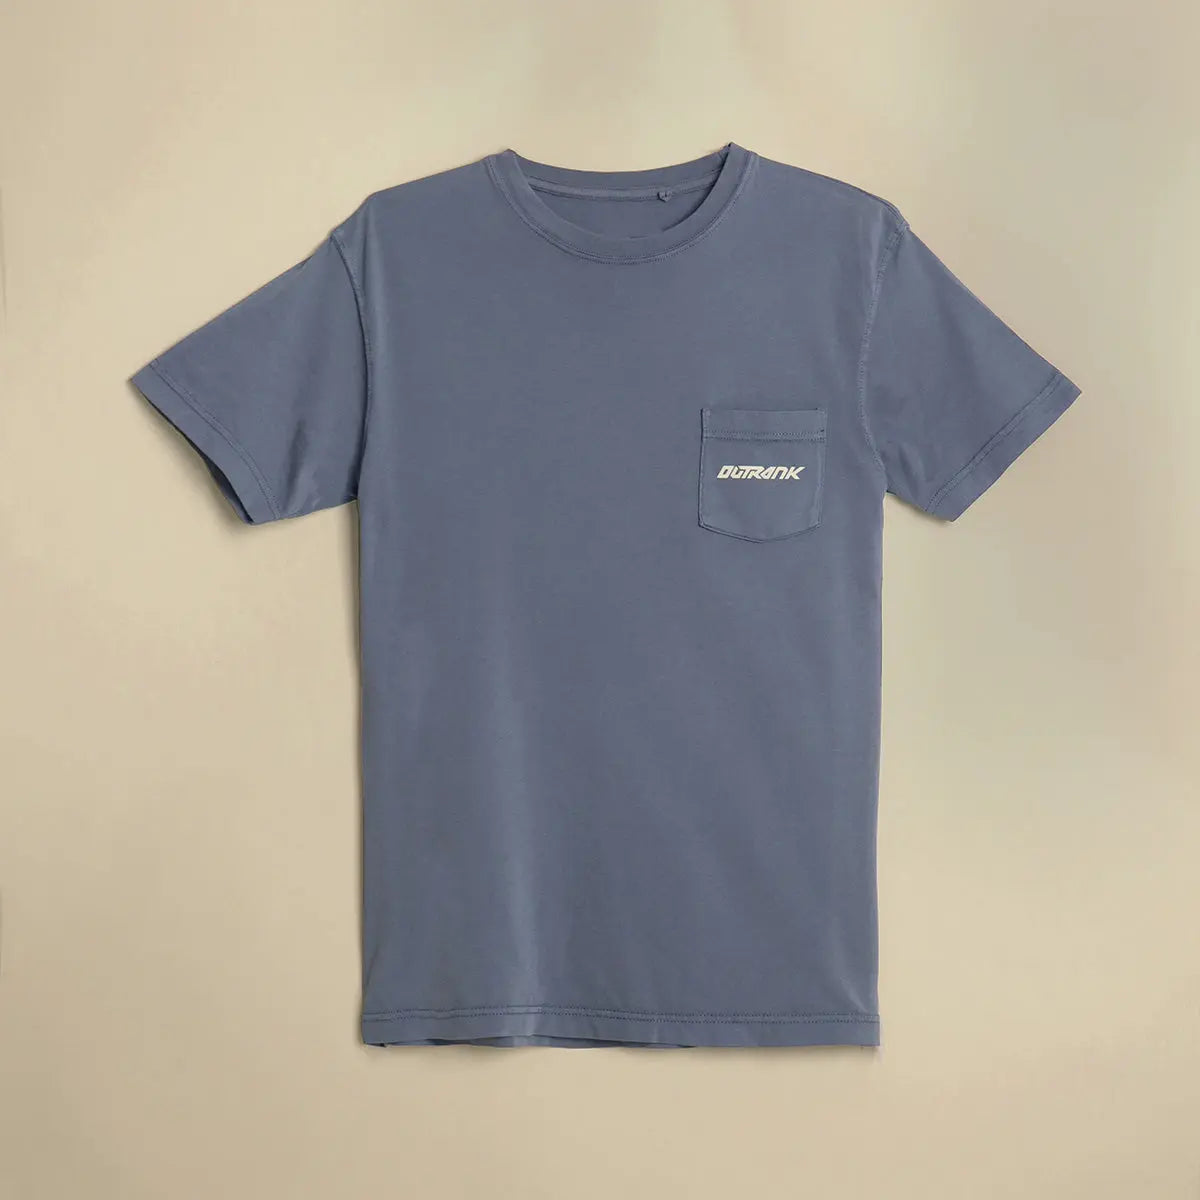 Everyday Pocket Flock T-Shirt - Blue - Outrank